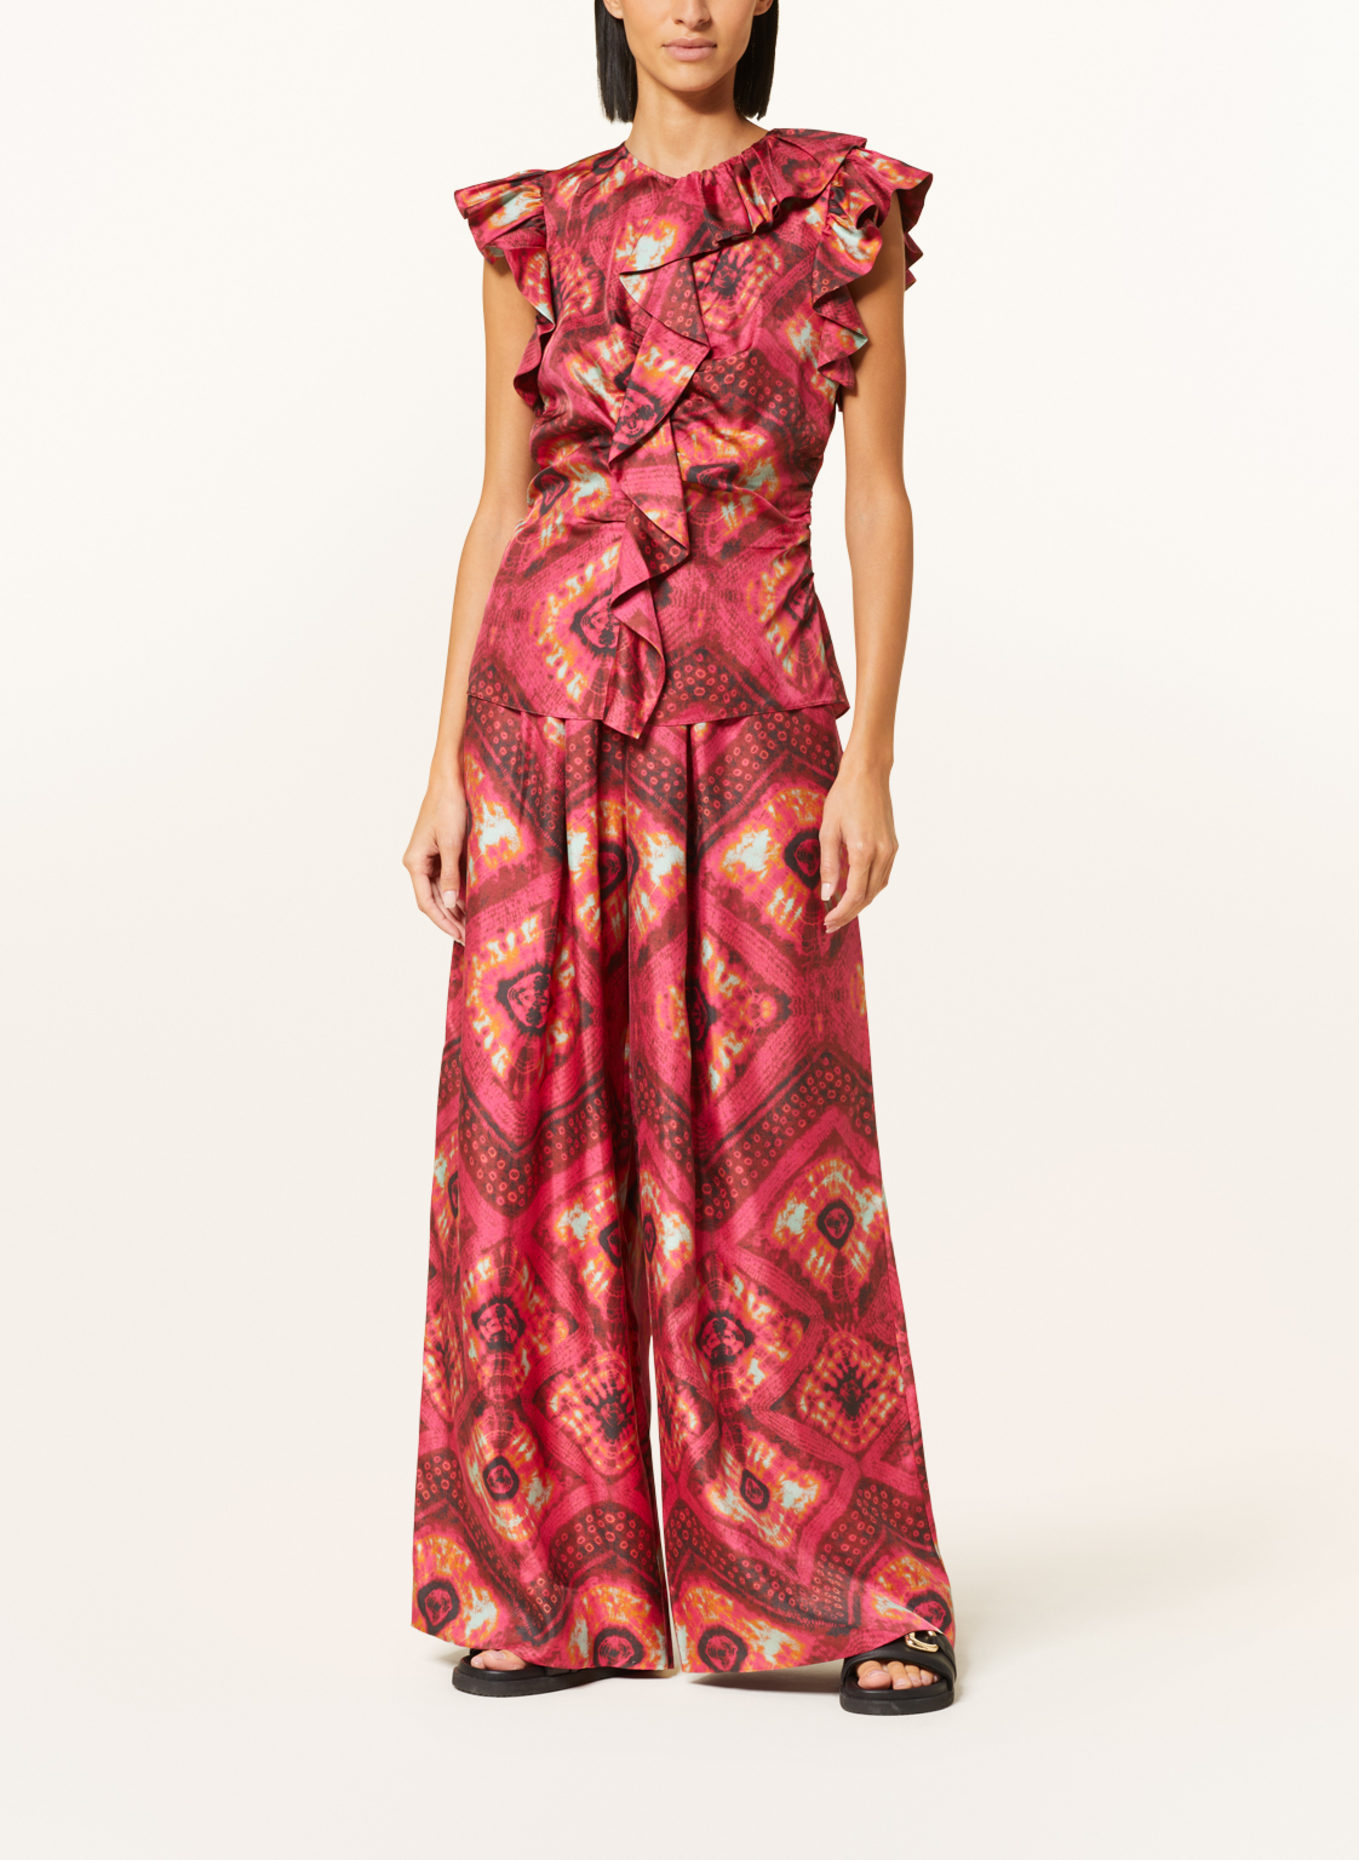 ULLA JOHNSON Blouse top VIDA made of silk with frills, Color: FUCHSIA/ DARK RED/ MINT (Image 2)